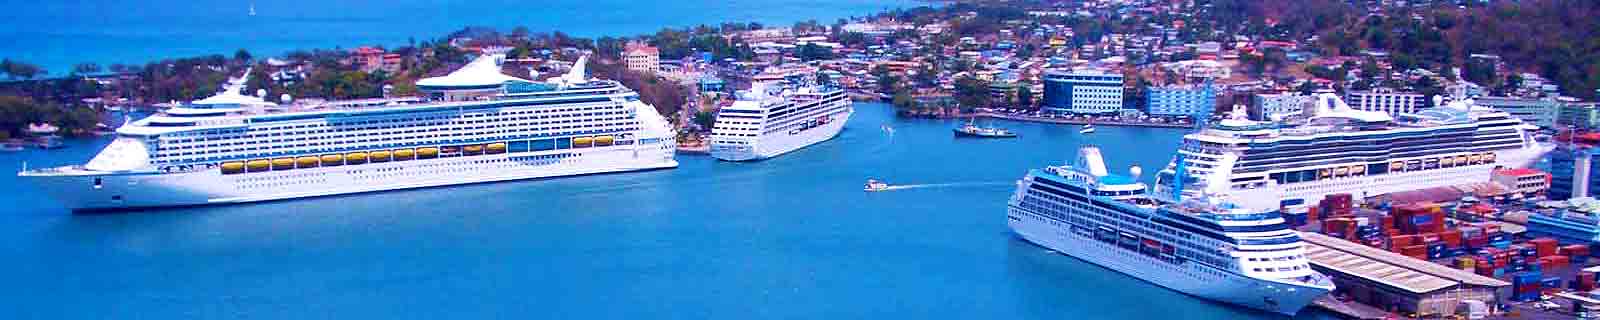 Panoramic photo of Saint Lucia (Castries) cruise port